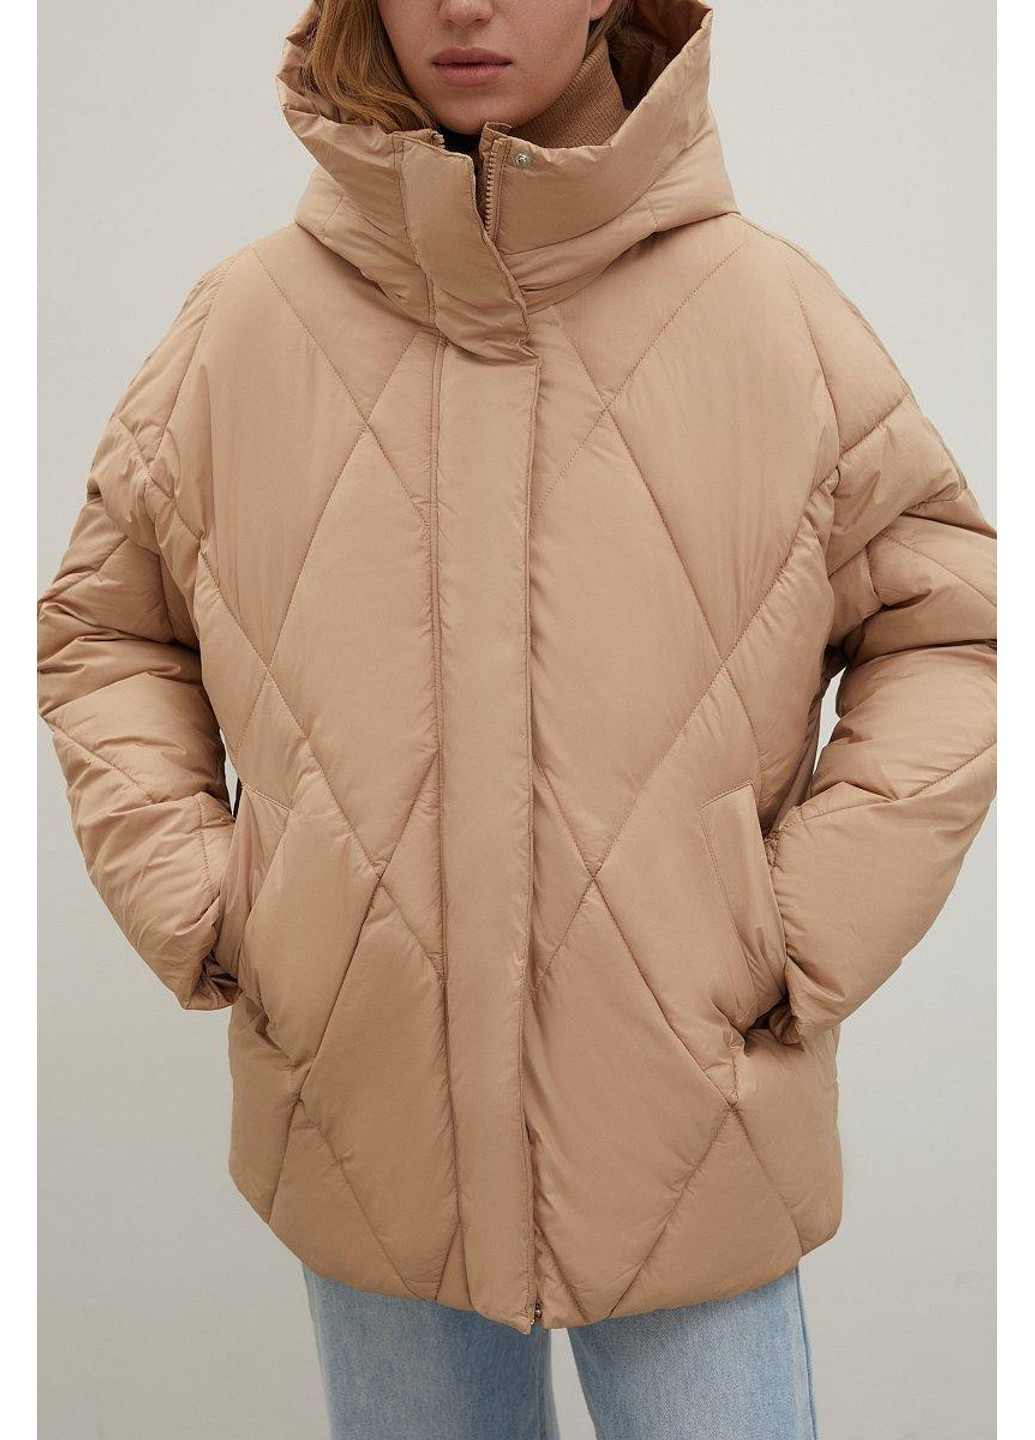 Бежевая зимняя куртка fac11022-706 Finn Flare